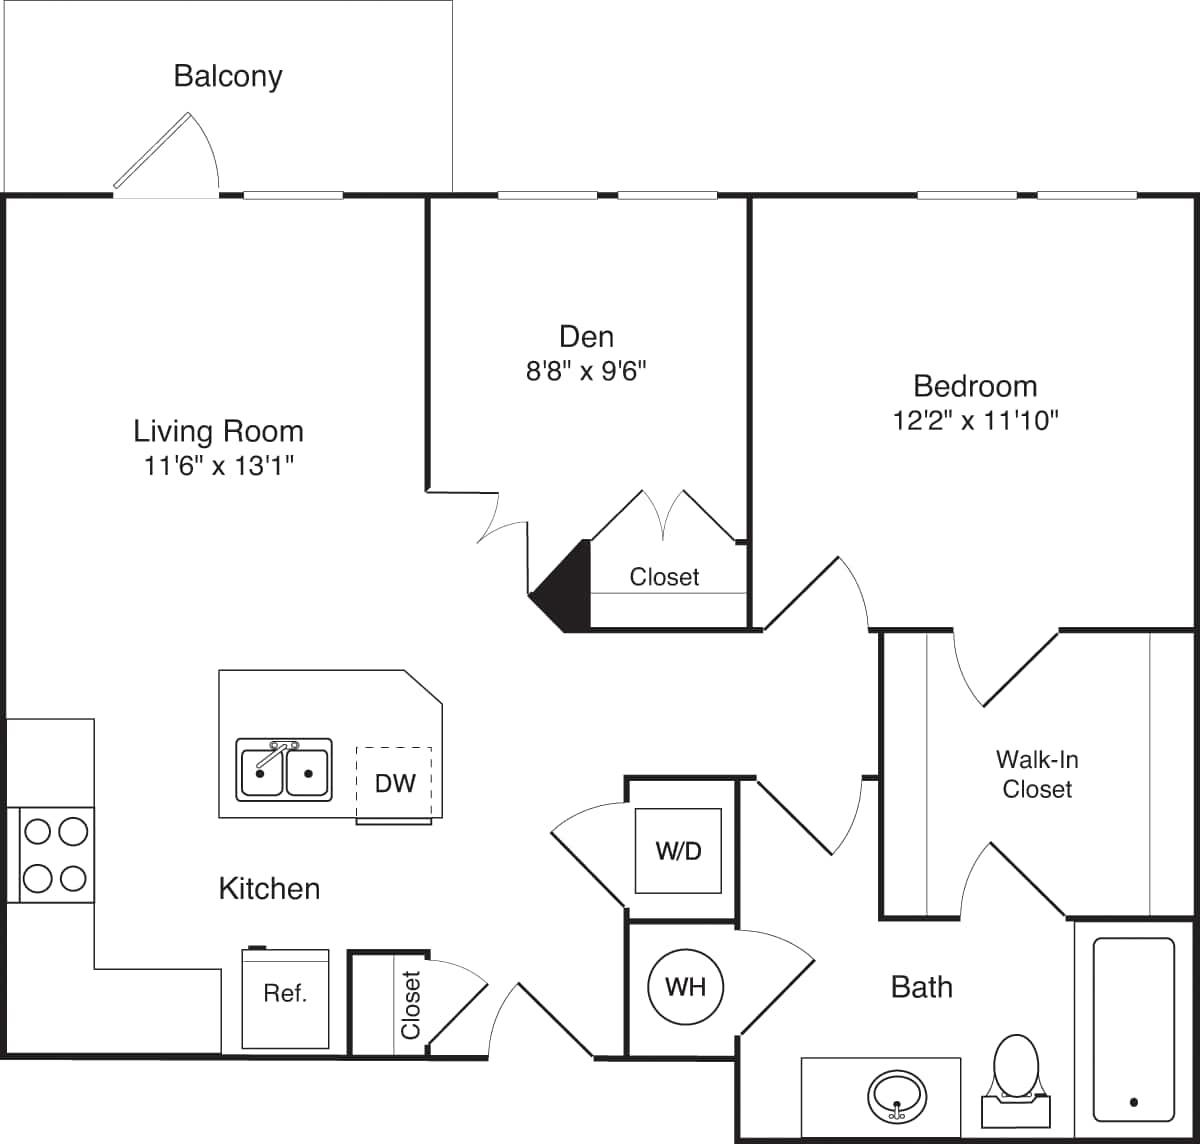 Floorplan diagram for AD1, showing 1 bedroom